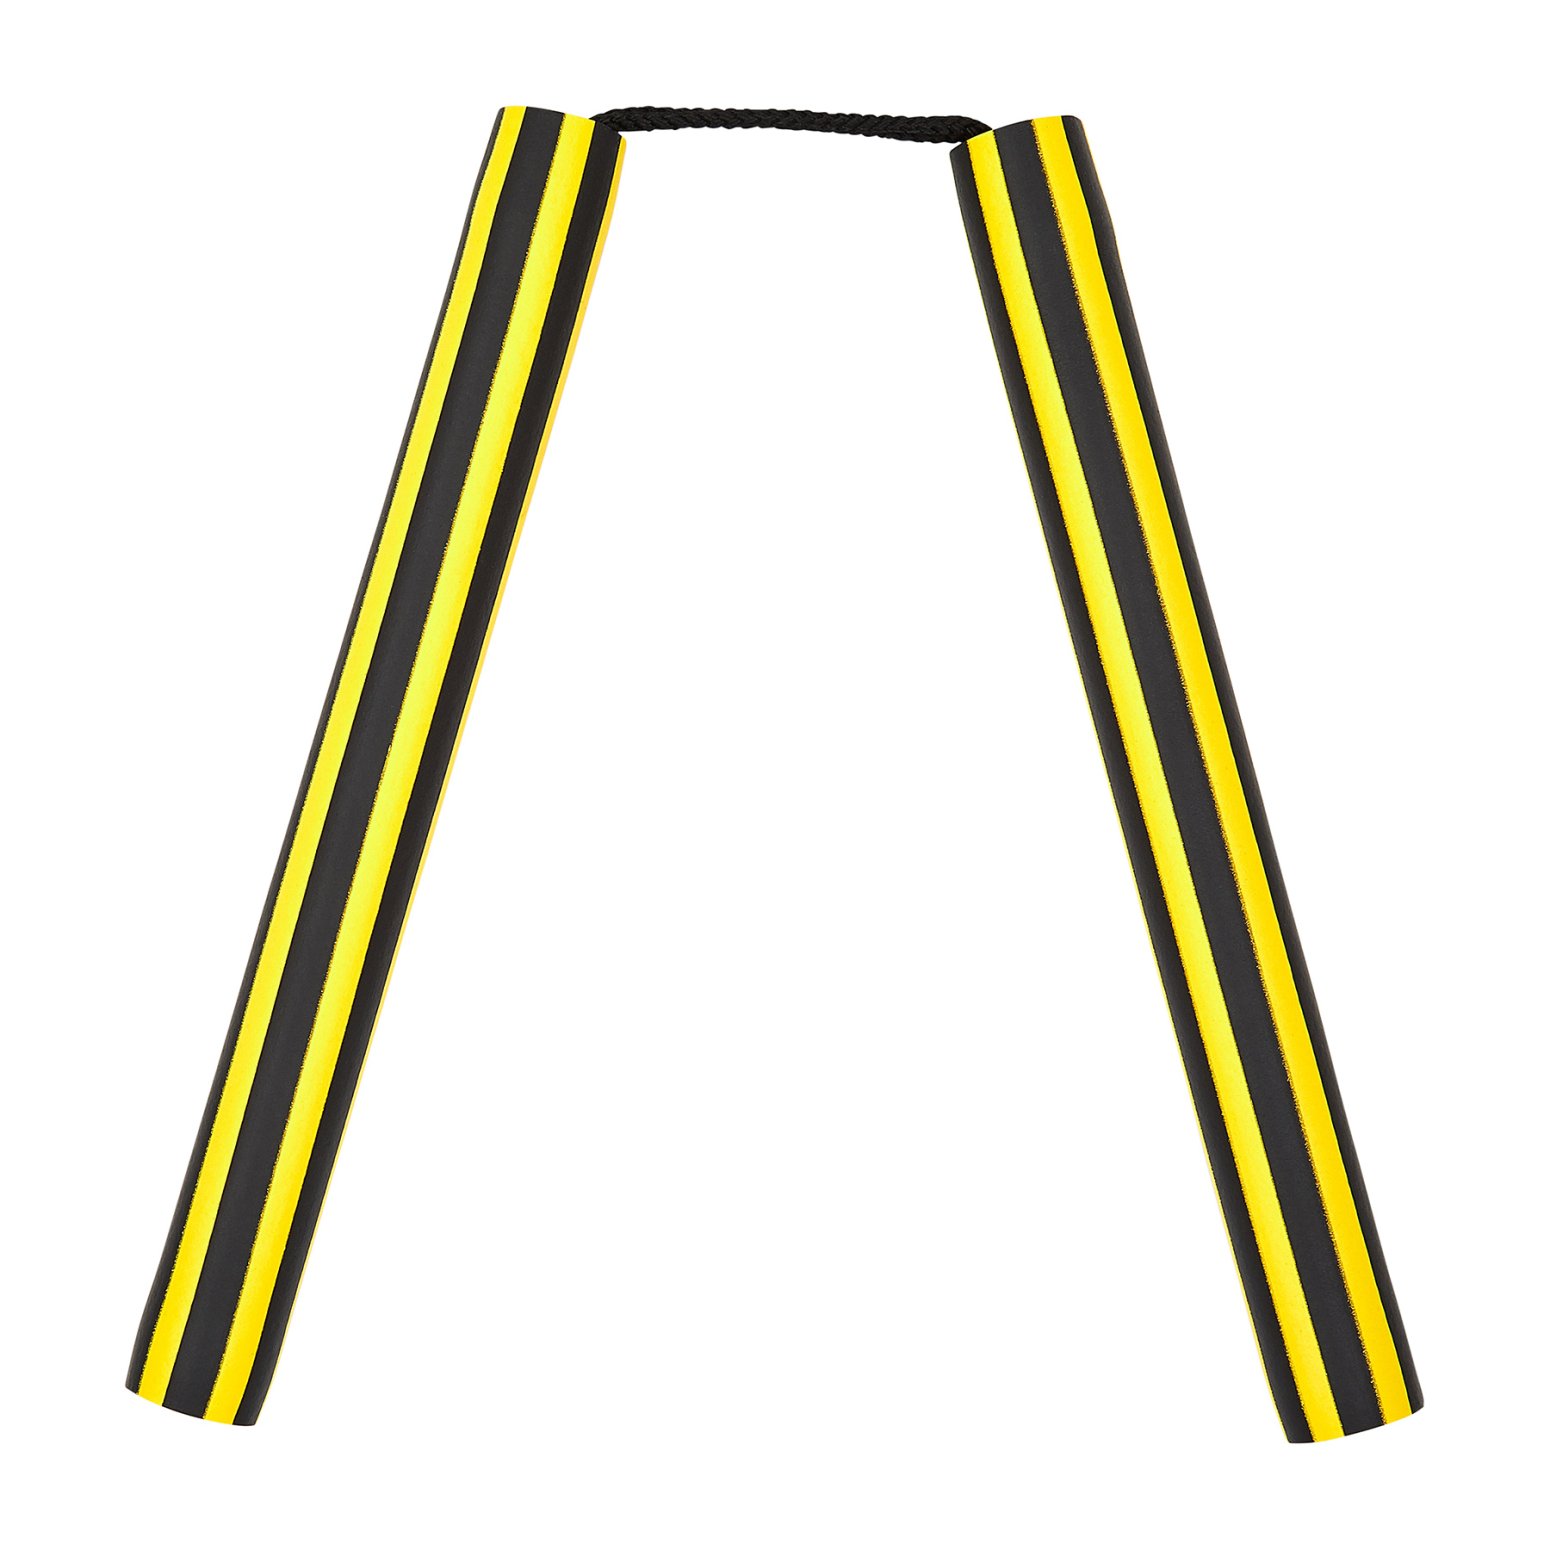 NR-014B: Foam Nunchaku with Cord Yellow / Black Stripes - Click Image to Close